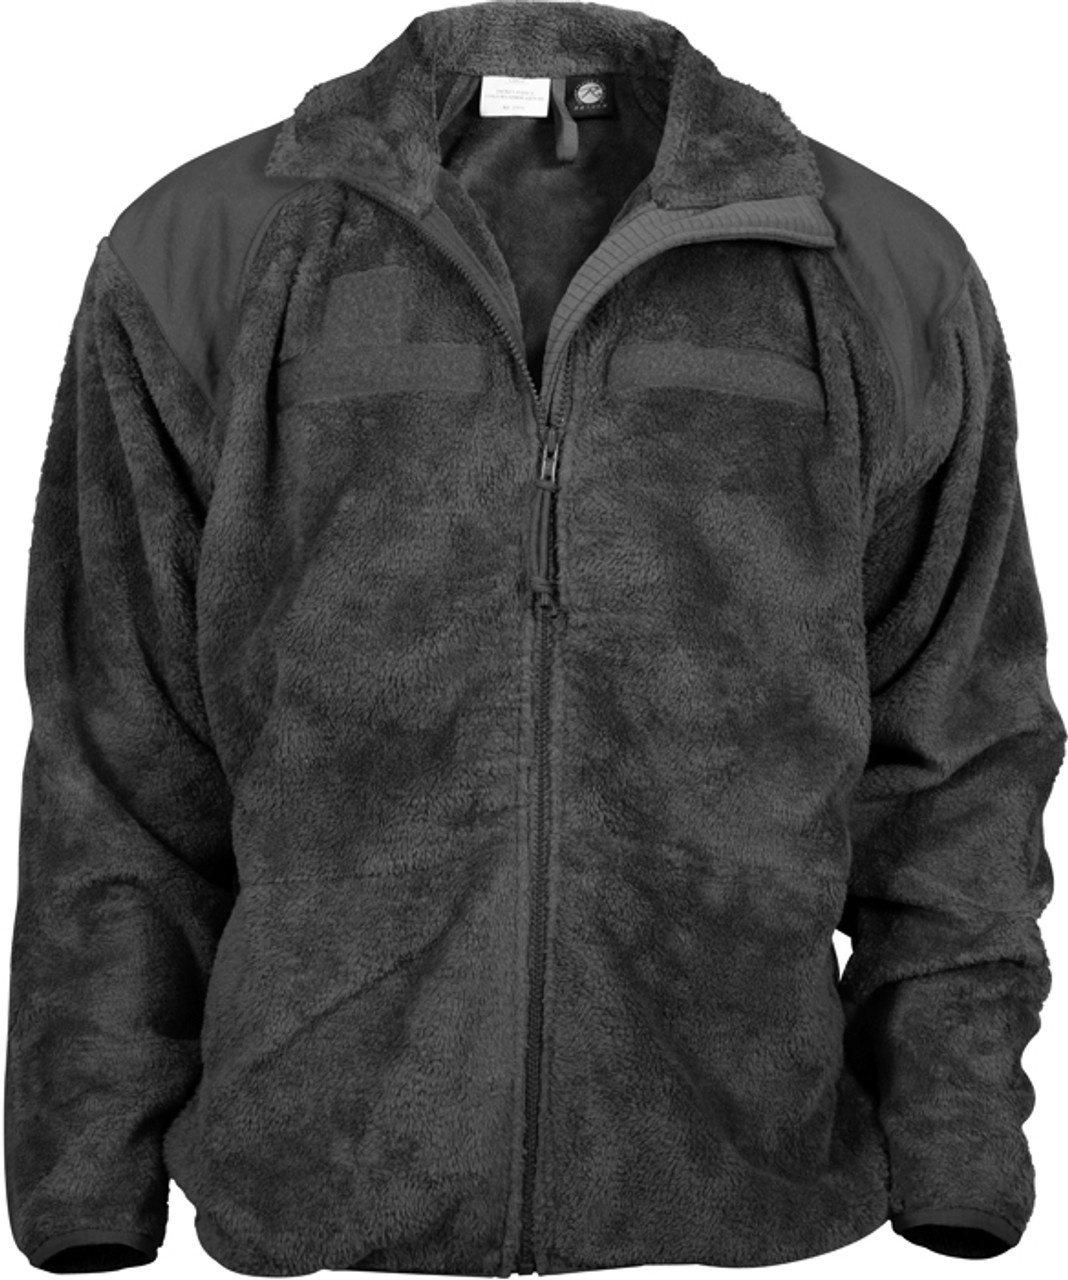 U.S. Army issued Fleece Jacket ECWCS Gen 3 – onethiefsurplus